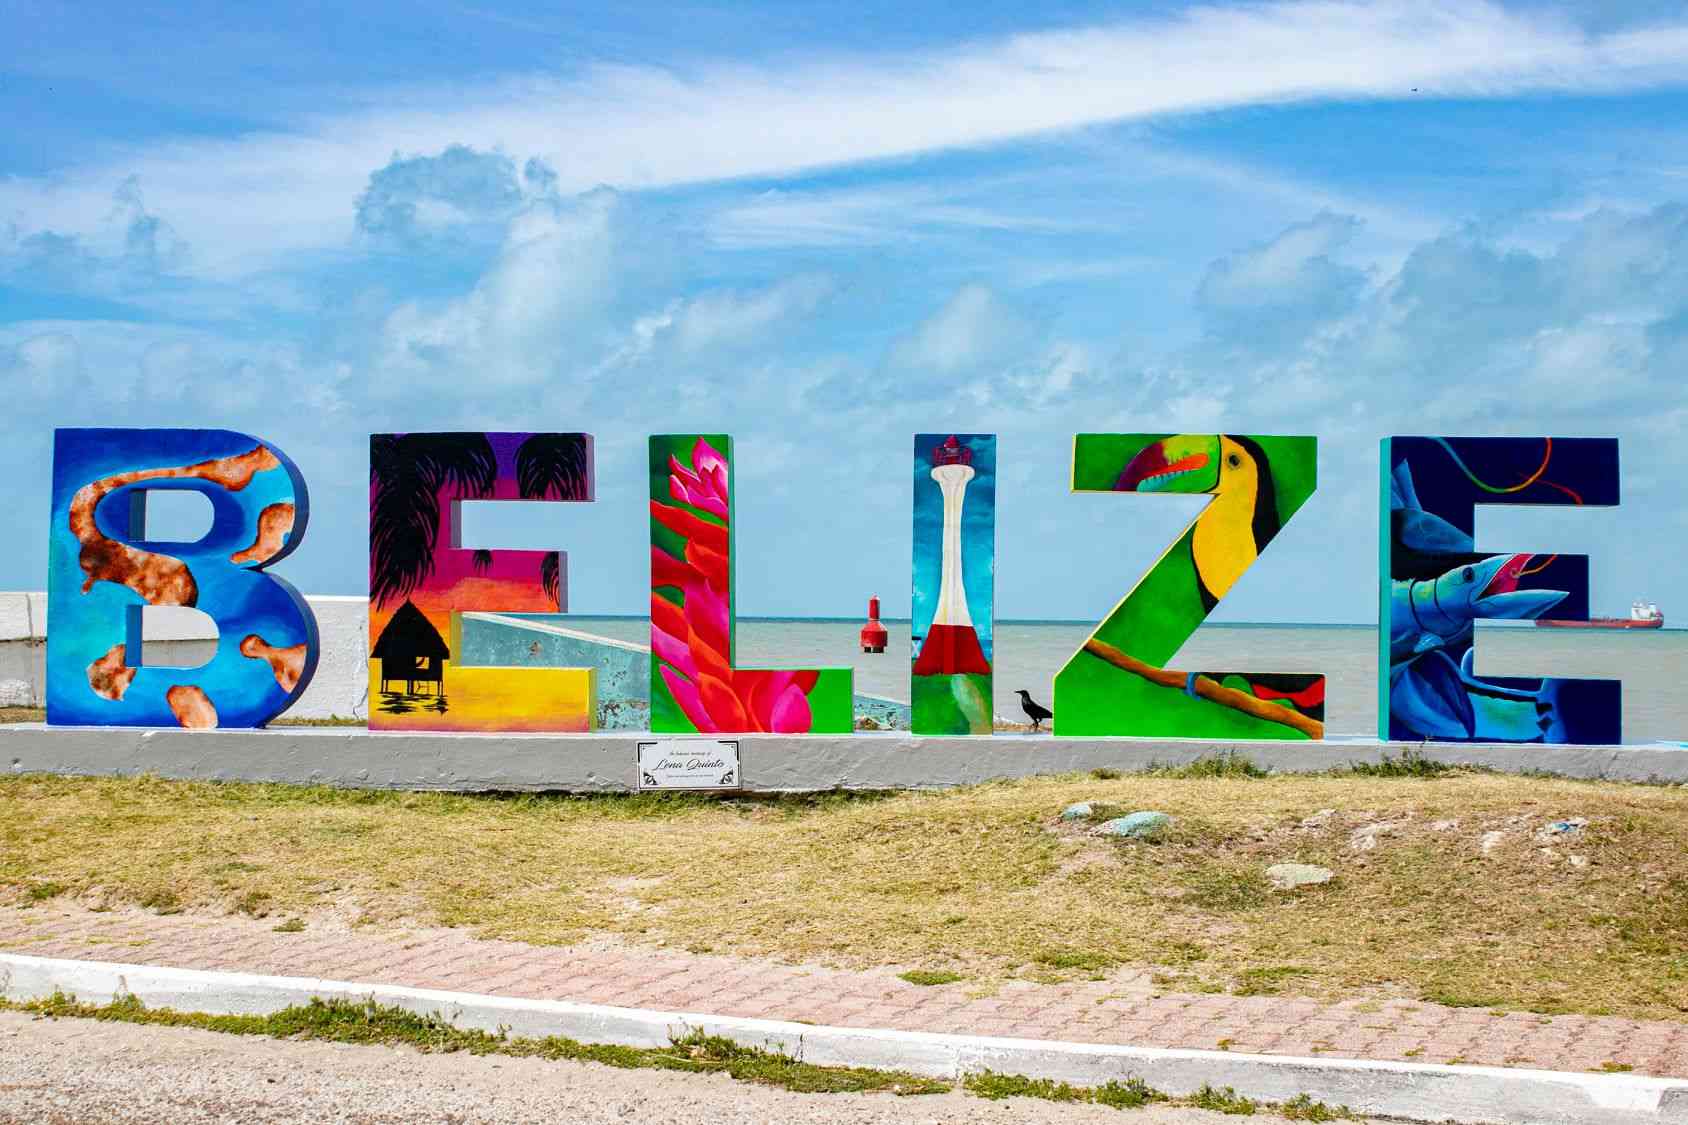 belize sign monument